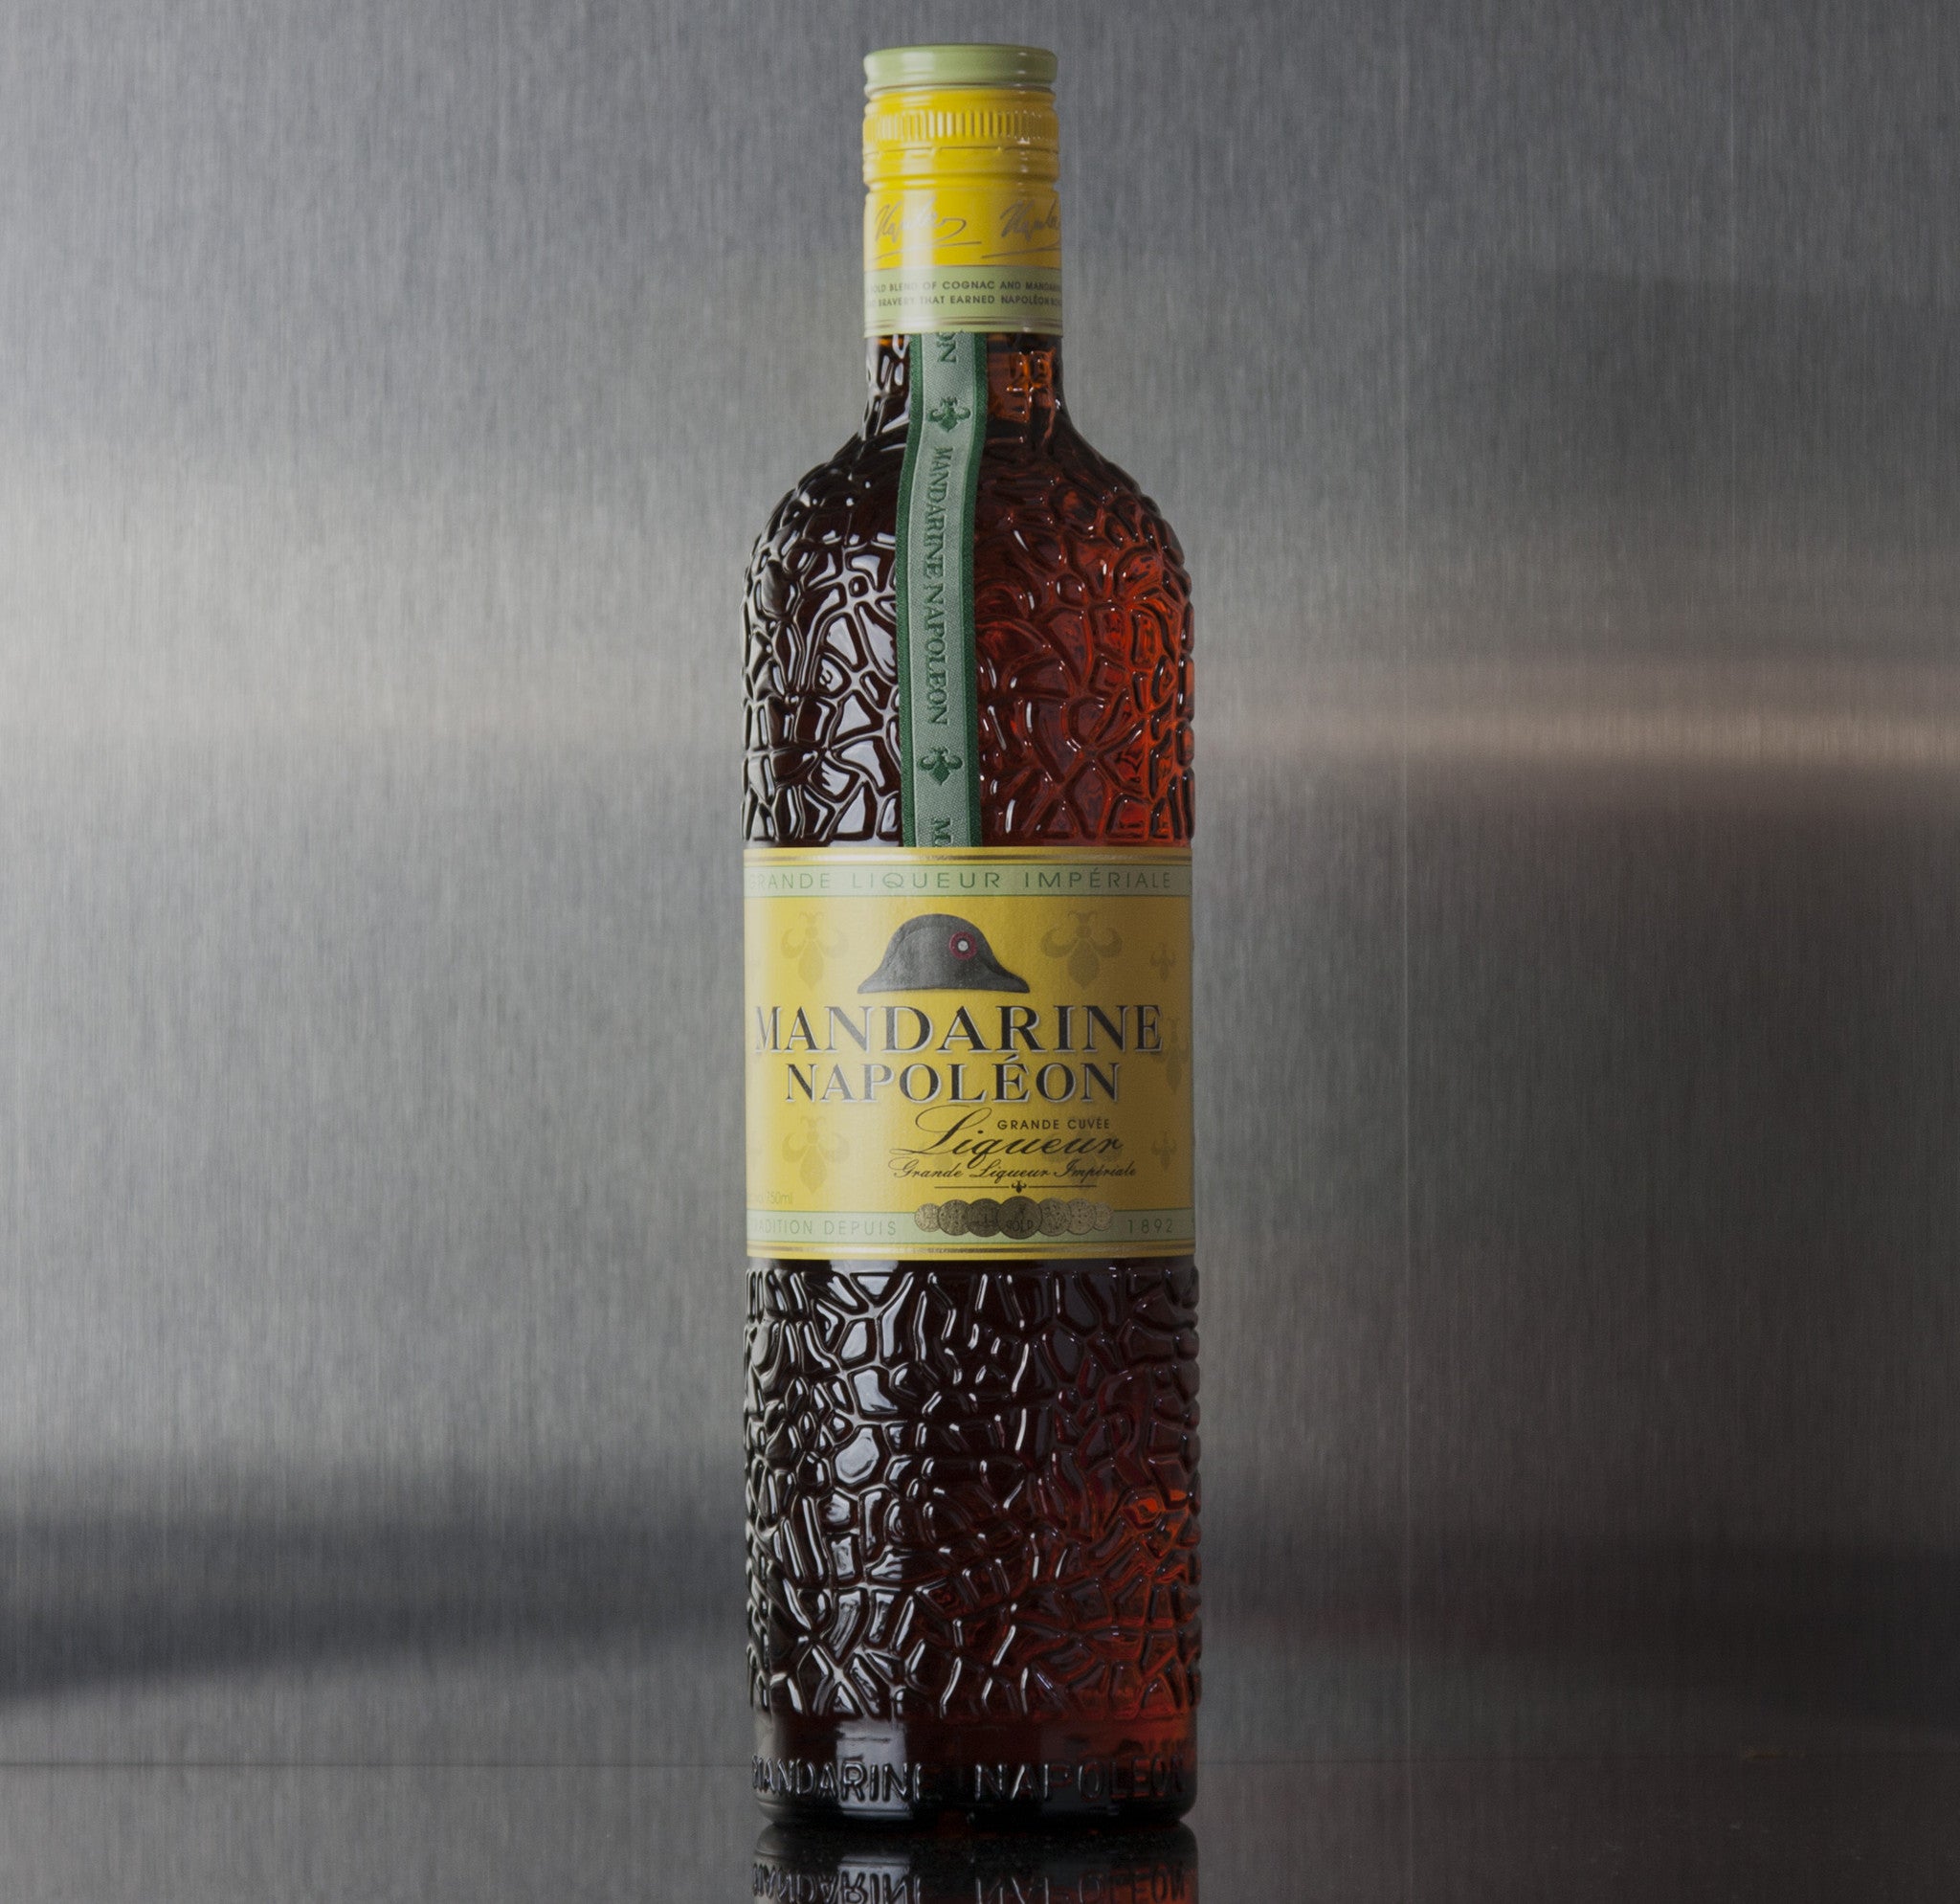 Mandarine Napoleon Liqueur  Third Base Market and Spirits – Third